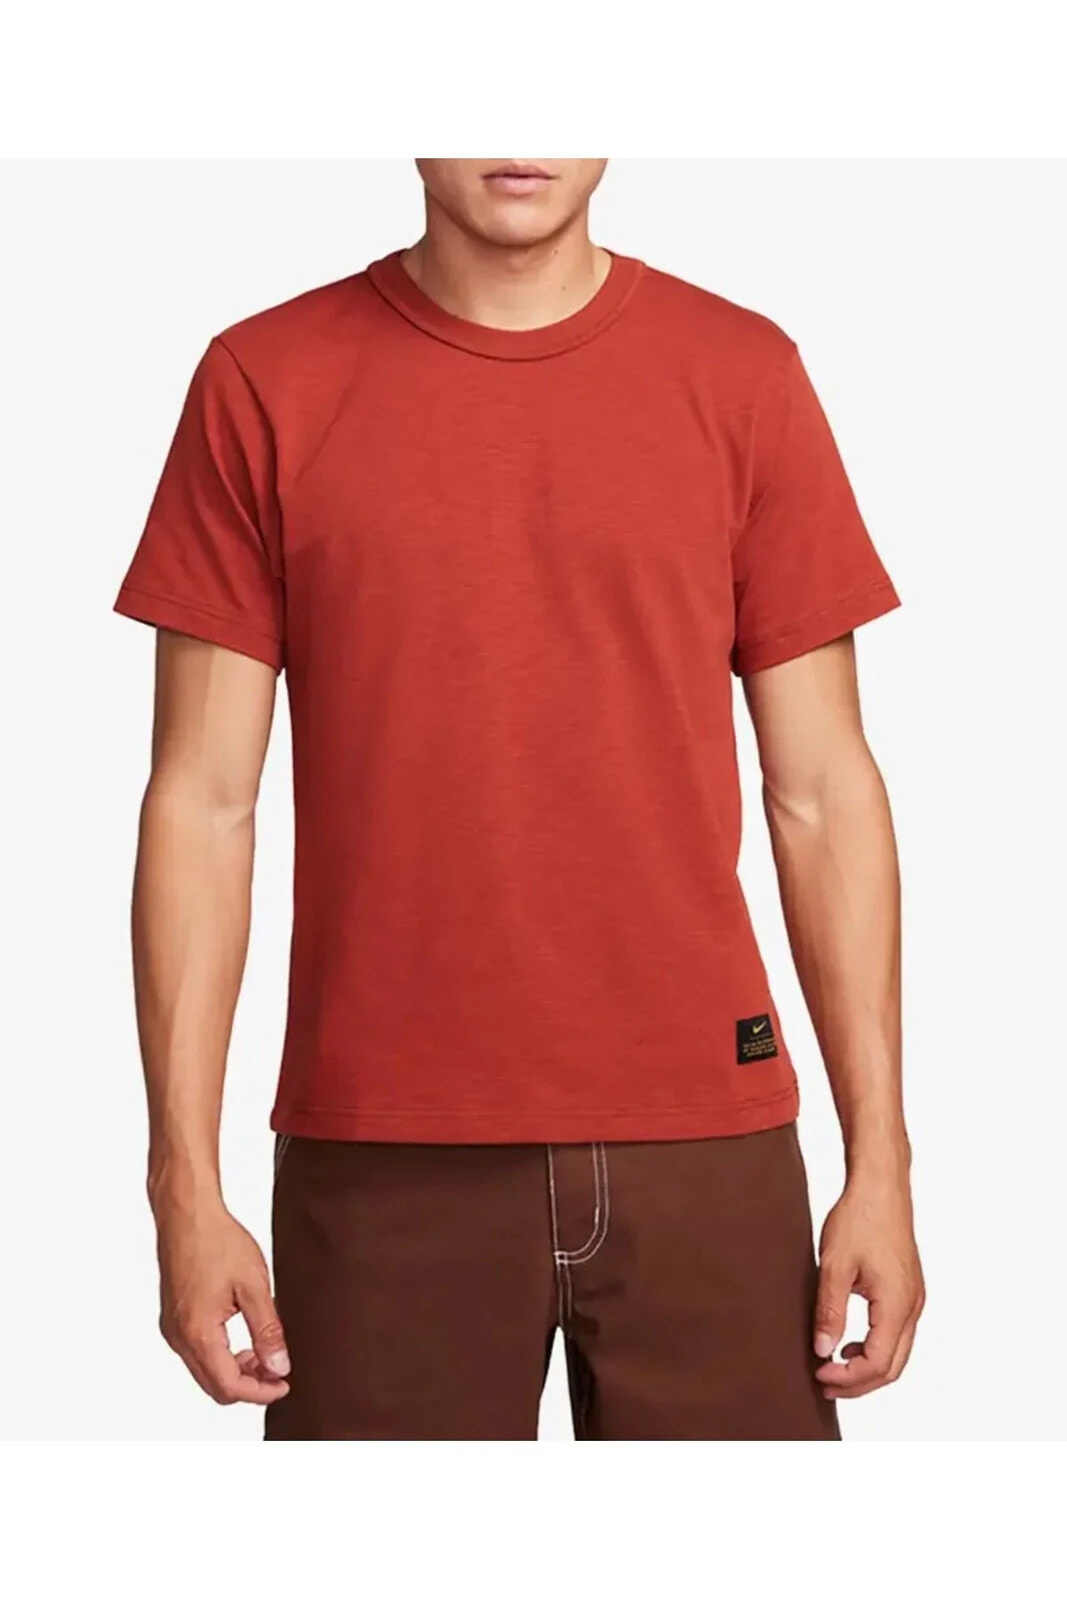 Life Knit Short-Sleeve Erkek T-shirt FN2645-832